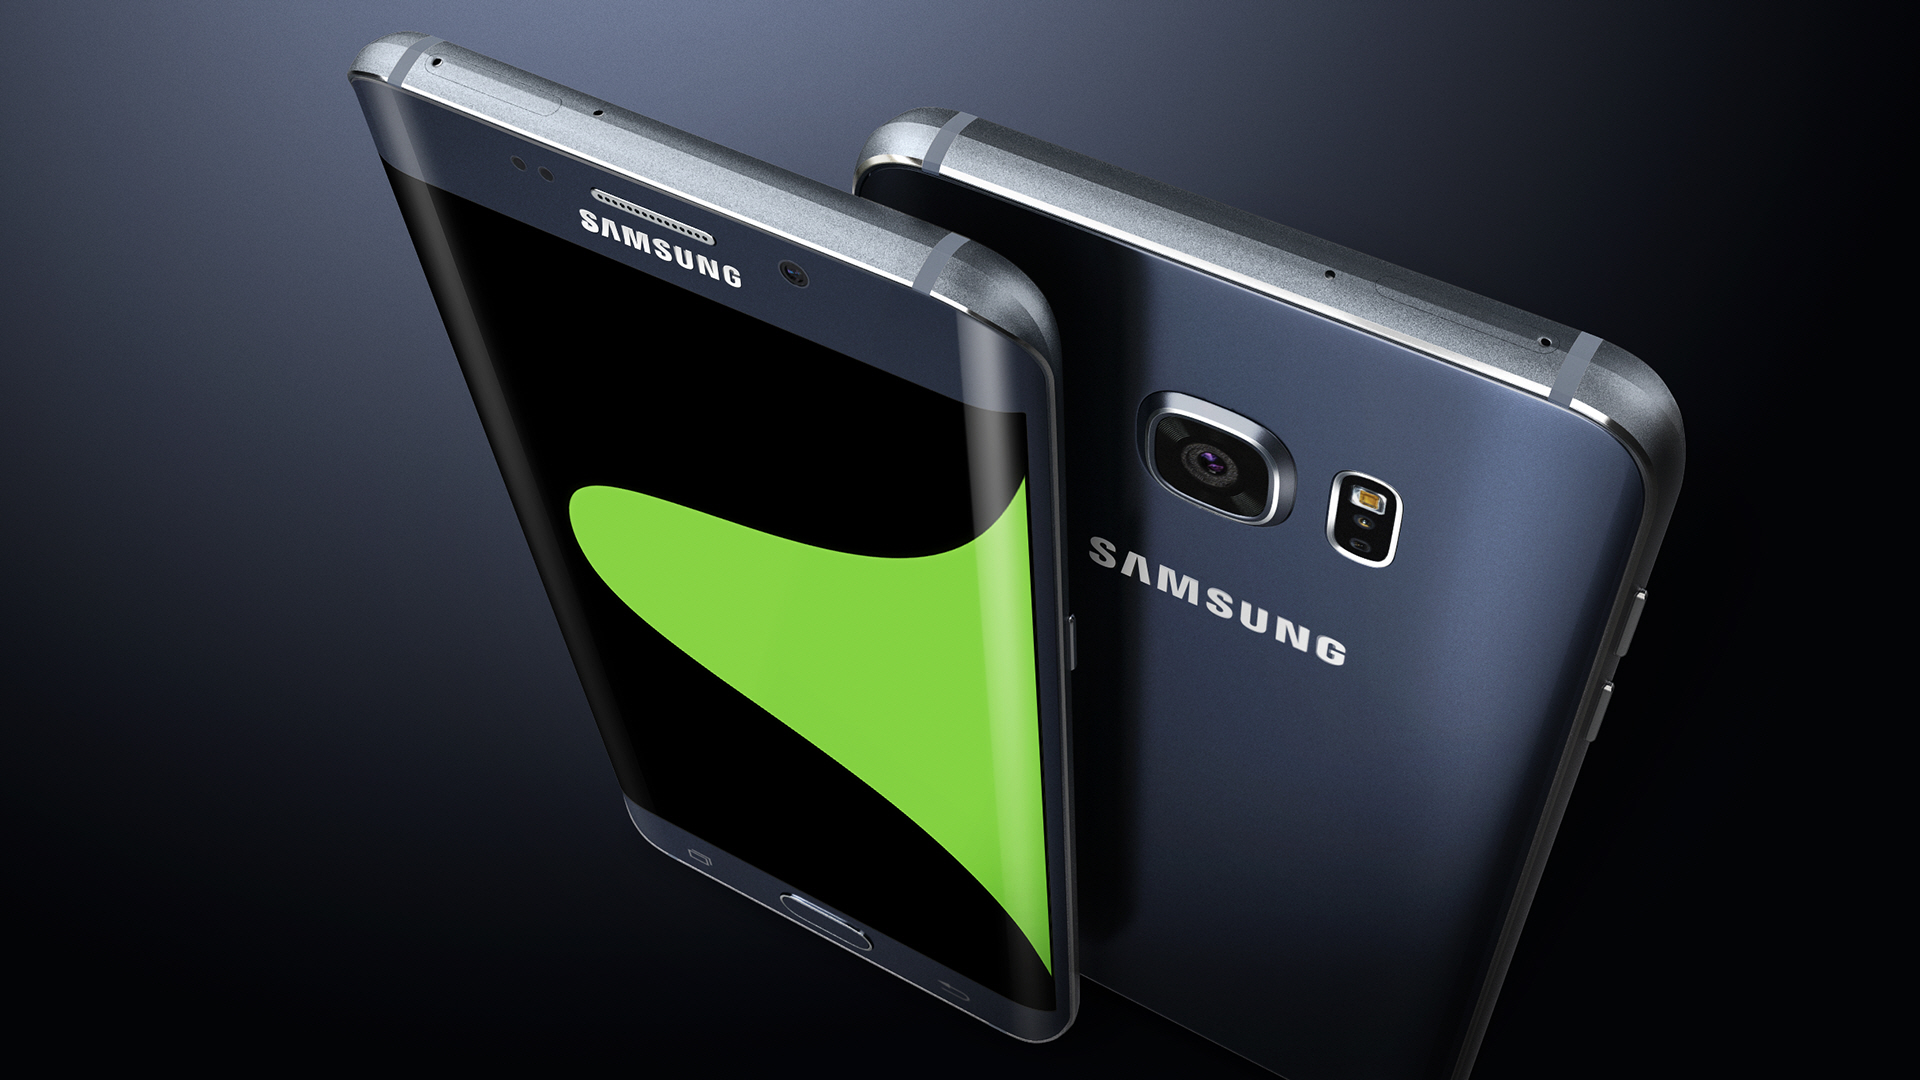 Samsung galaxy s9 серый. Samsung Galaxy s7 Edge. Galaxy s6 Edge+. Самсунг Galaxy s6 Edge Plus. S6 Edge Plus.